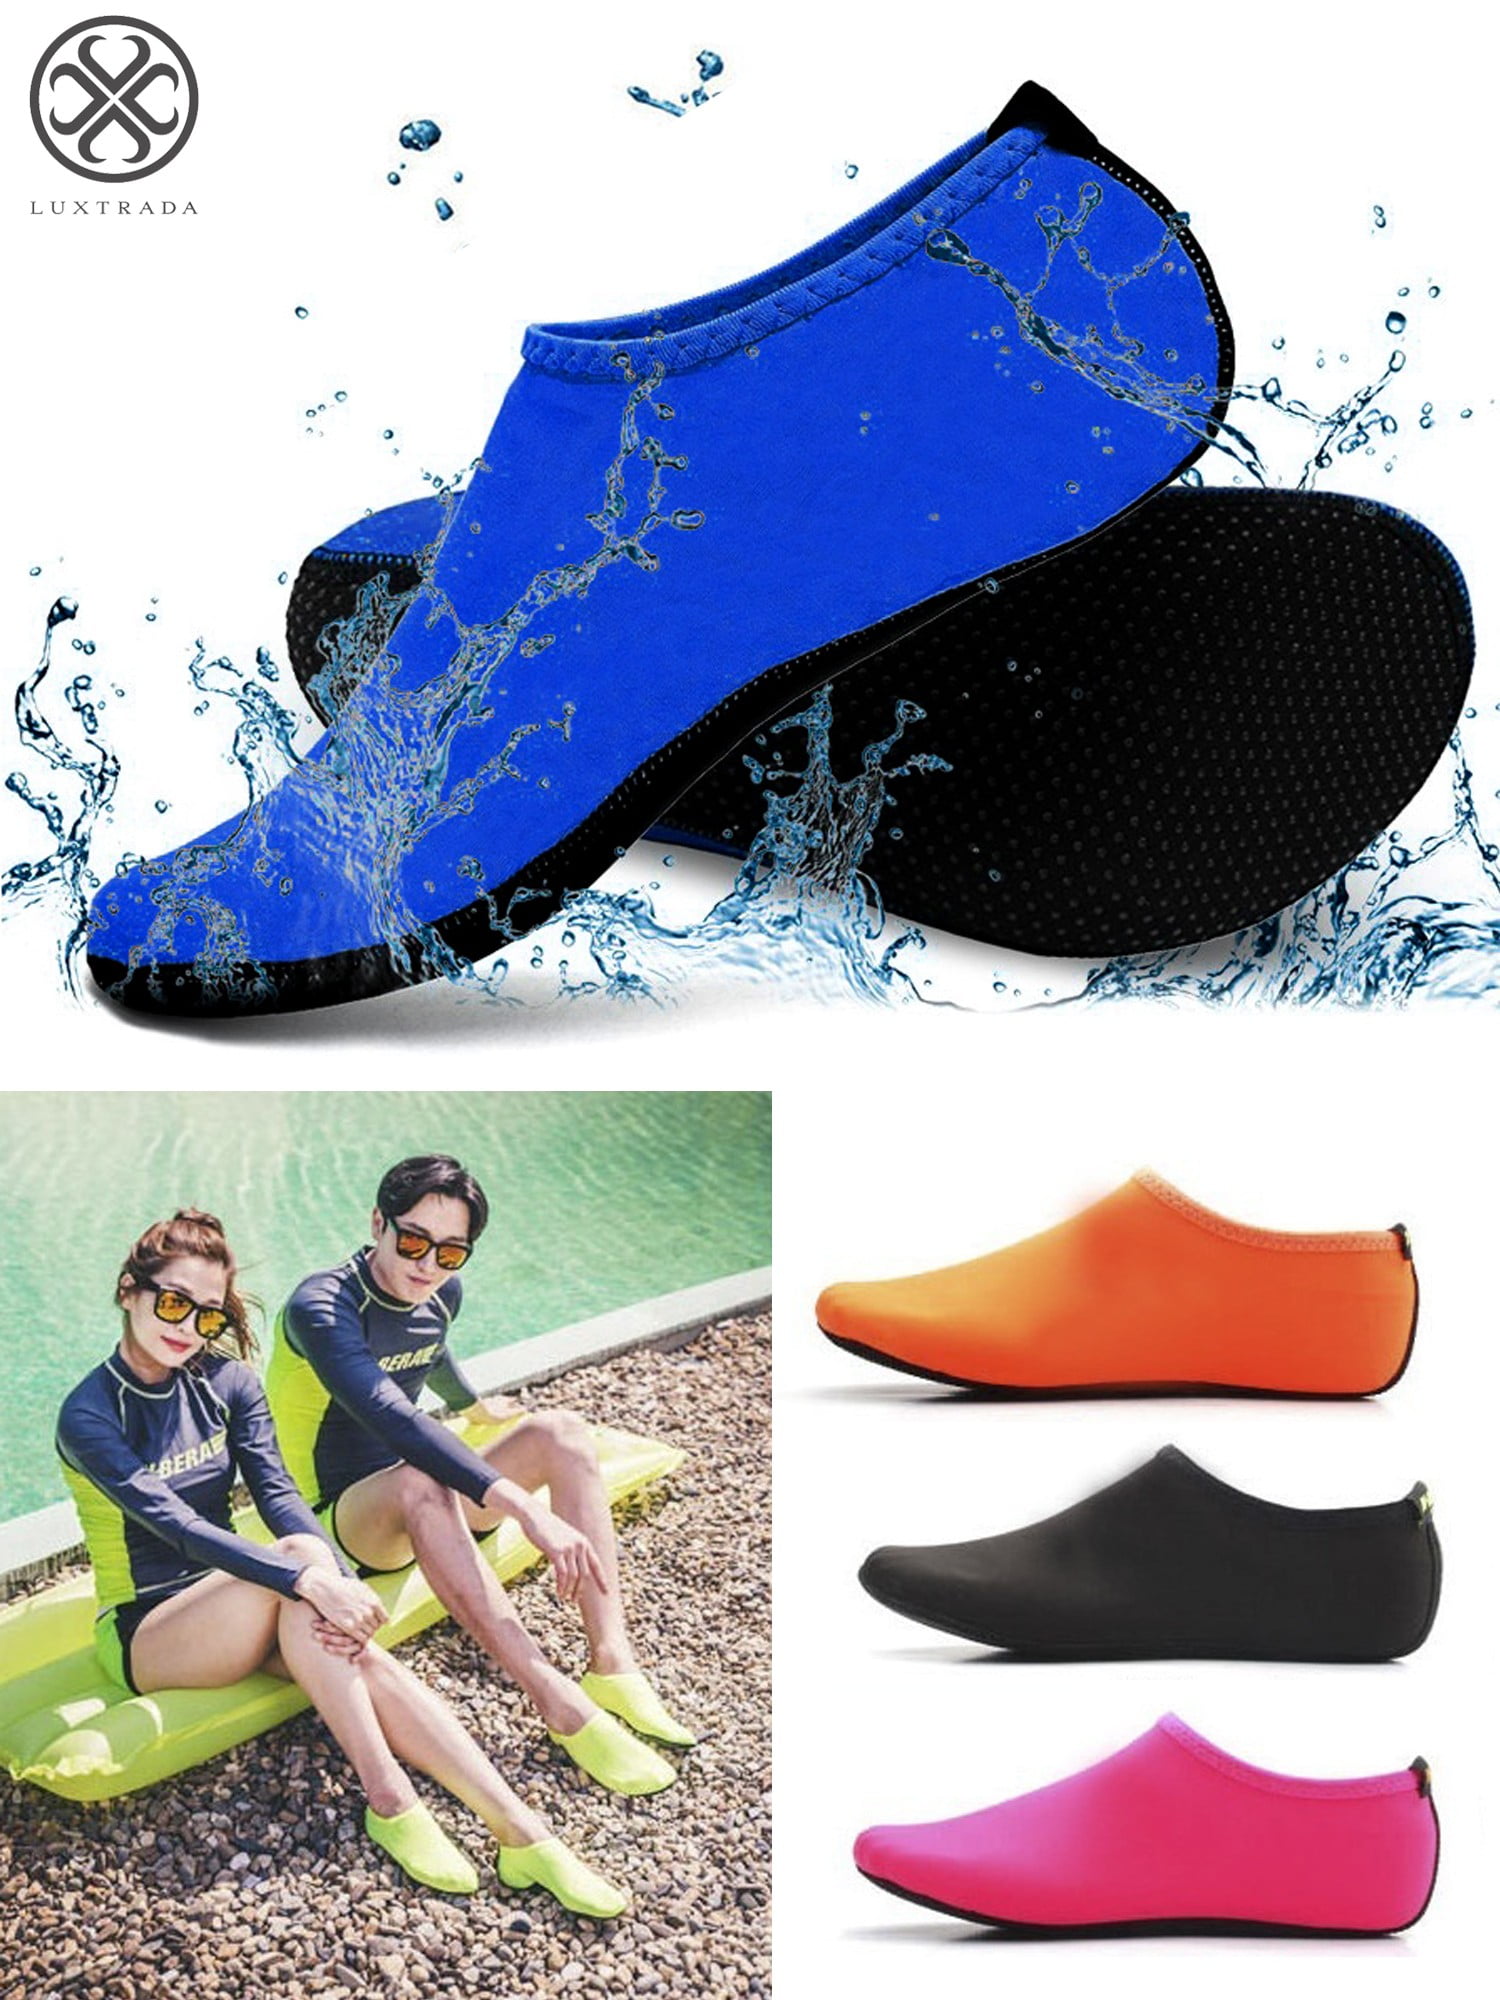 Unisex Water Skin Shoes Aqua Diving Socks for Pool Beach Swim Surf Yoga Exercise 